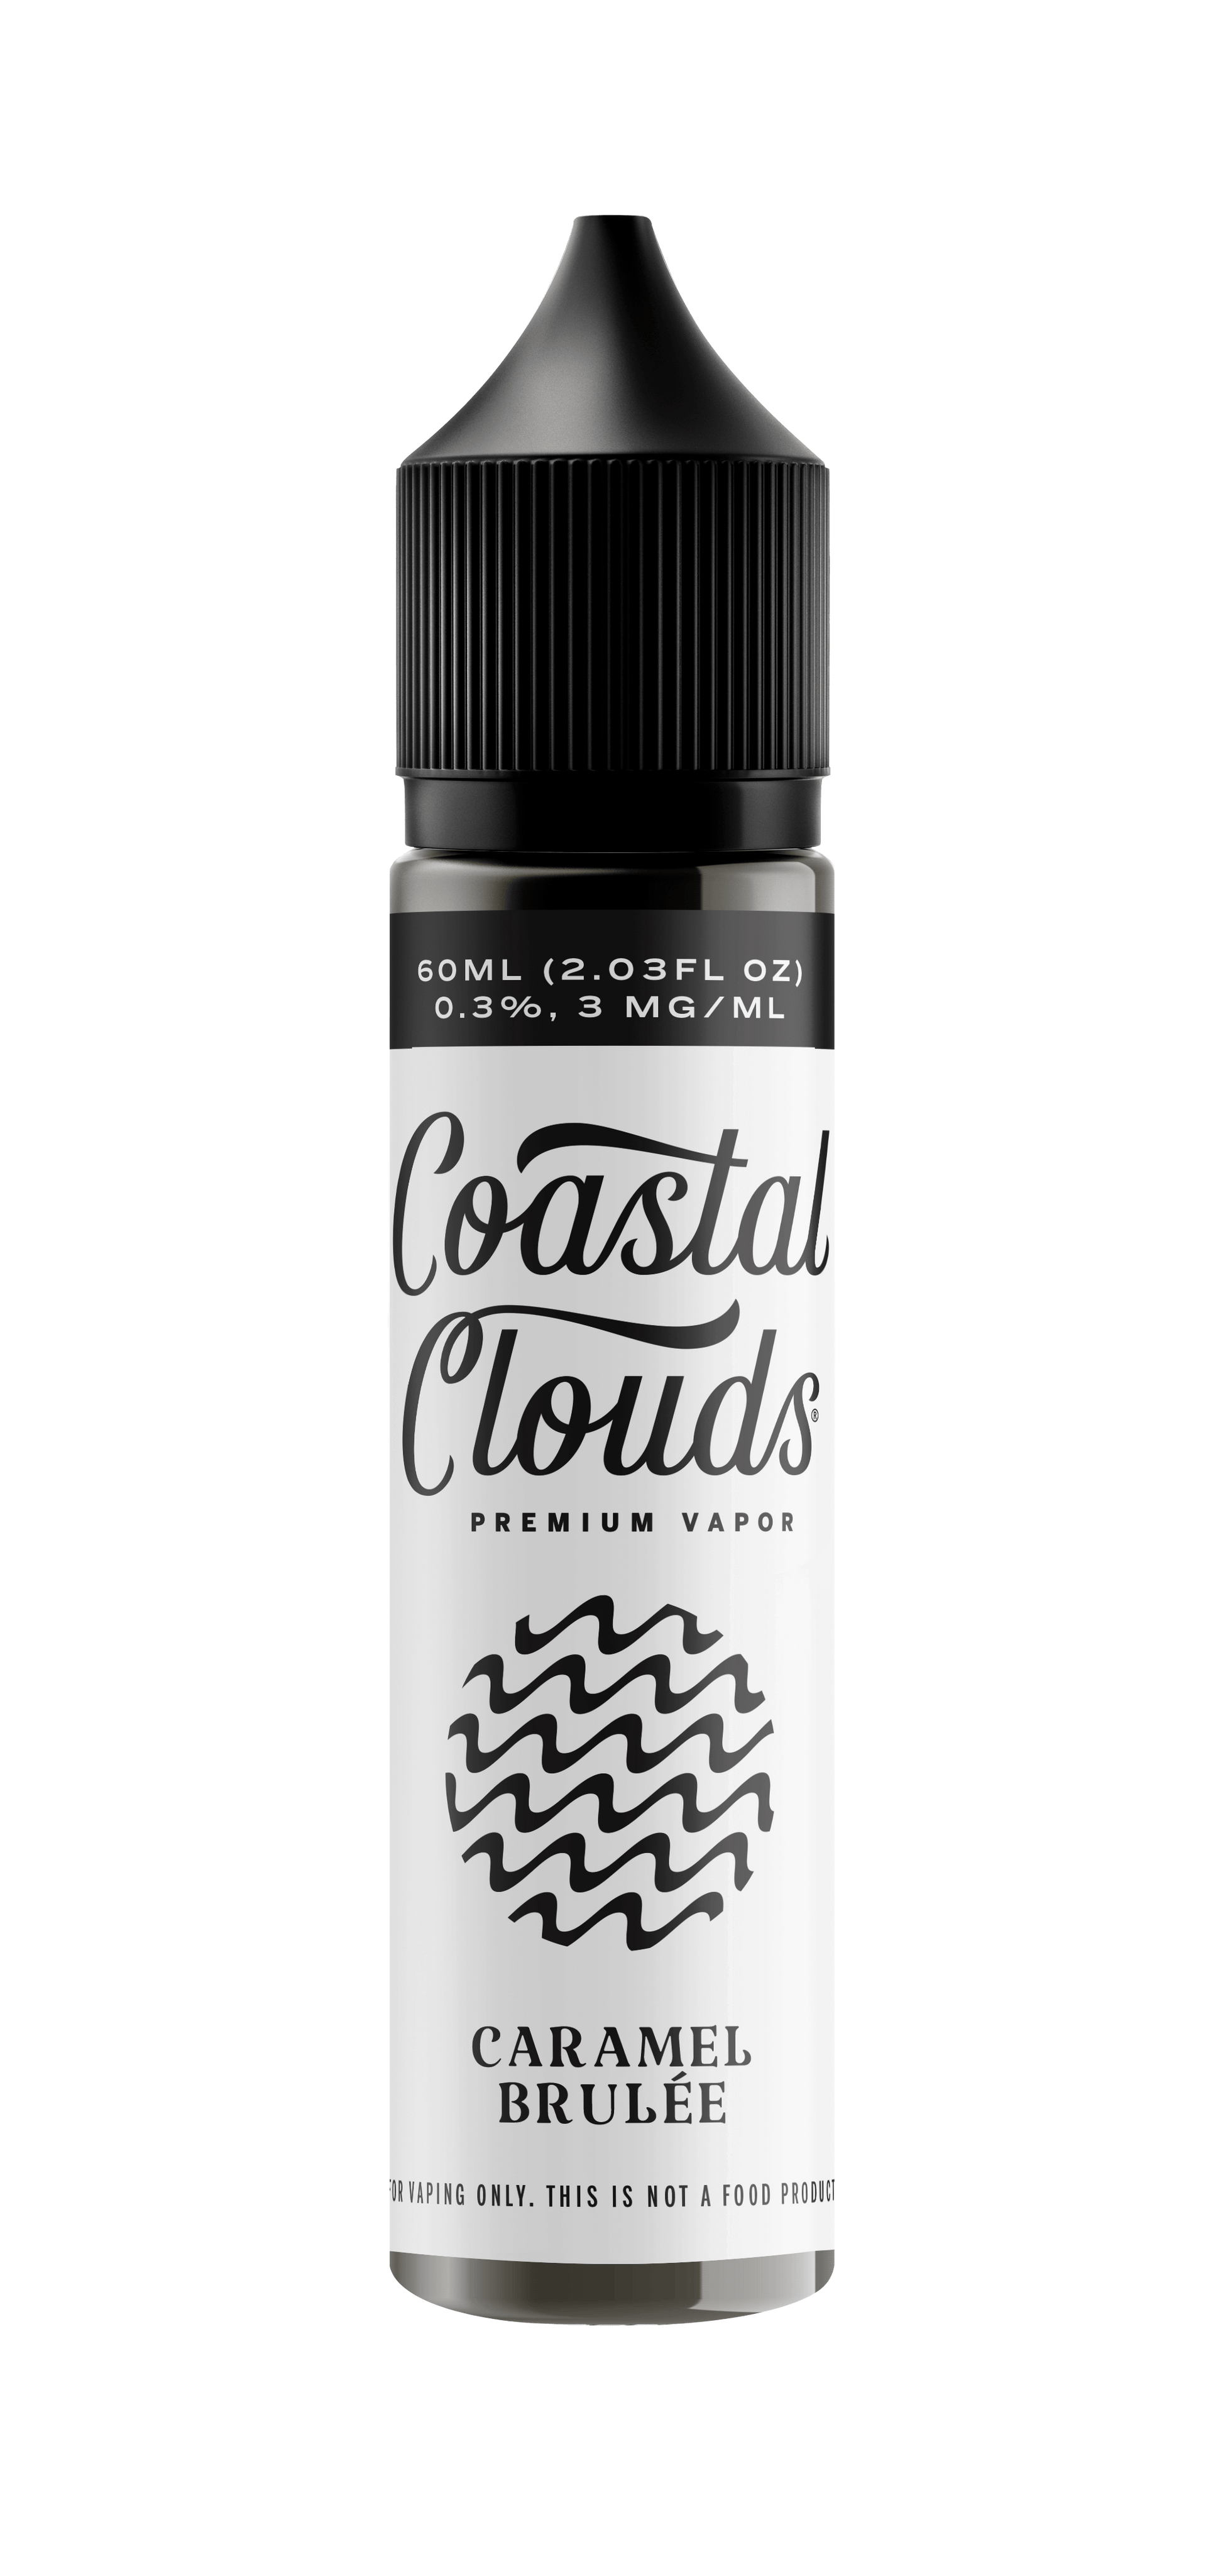 Caramel Brulee TF-Nic by Coastal Clouds Series 60mL Bottle